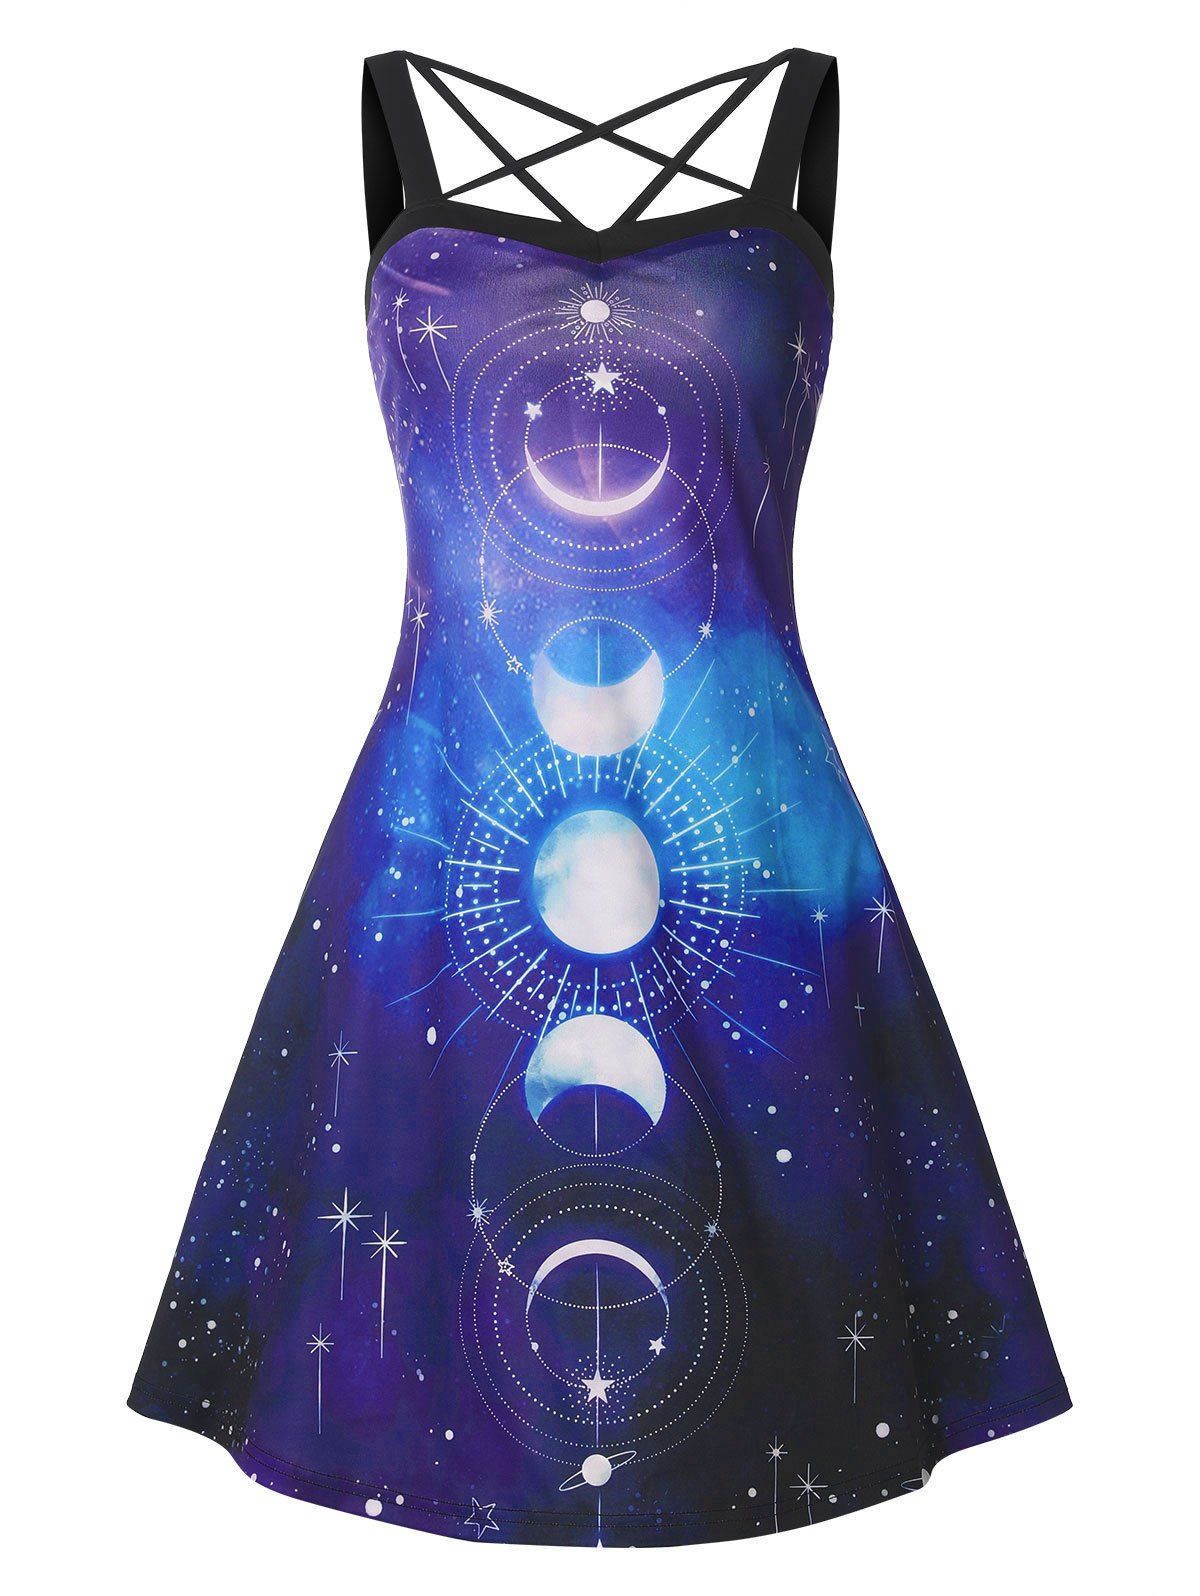 Moon Phase Galaxy Print Crisscross Dress - multicolor M